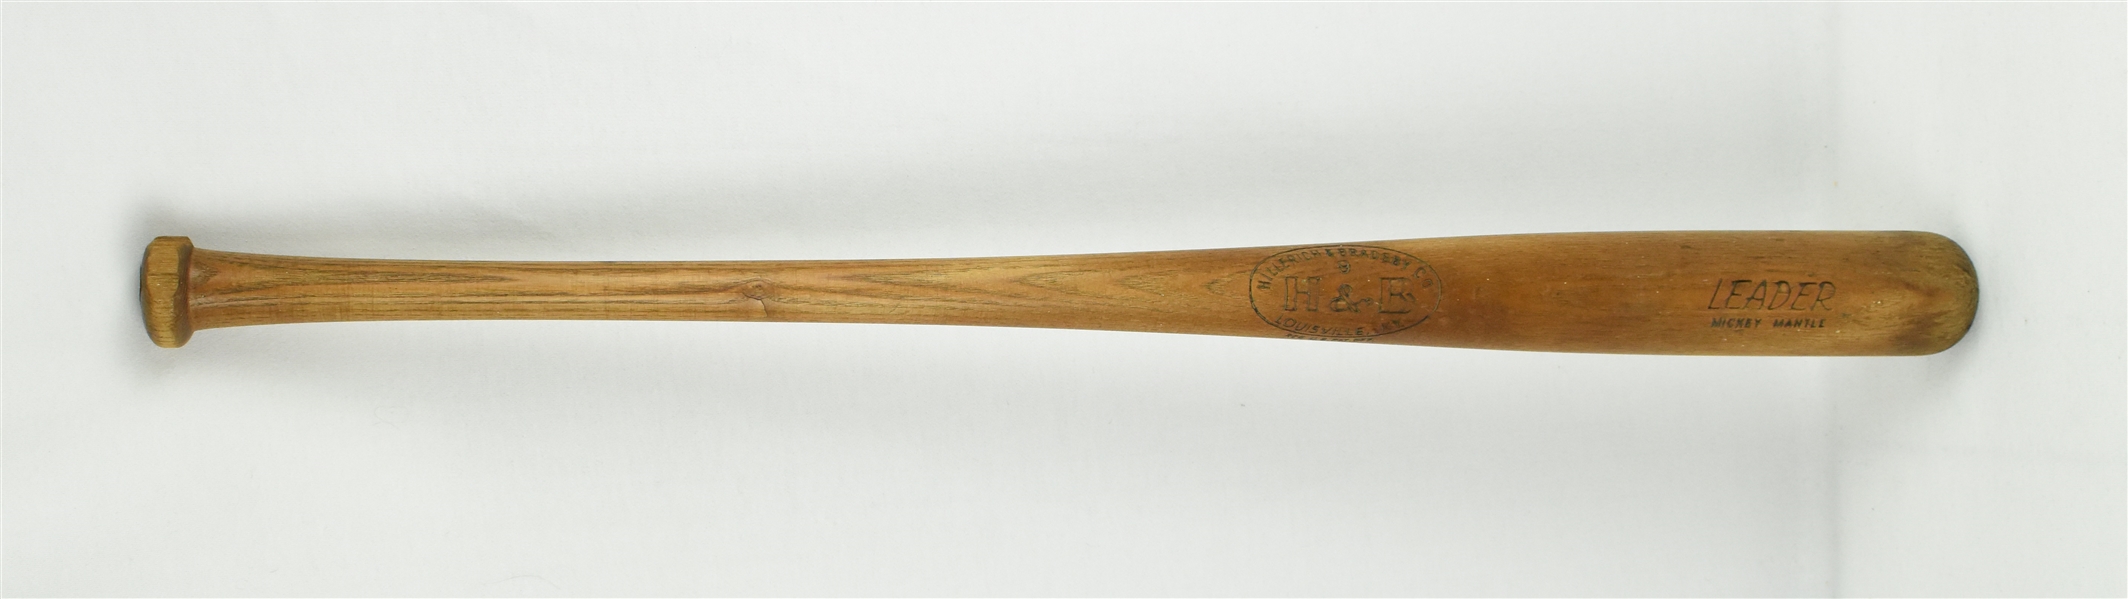 Mickey Mantle 1960-64 Louisville Slugger Bat